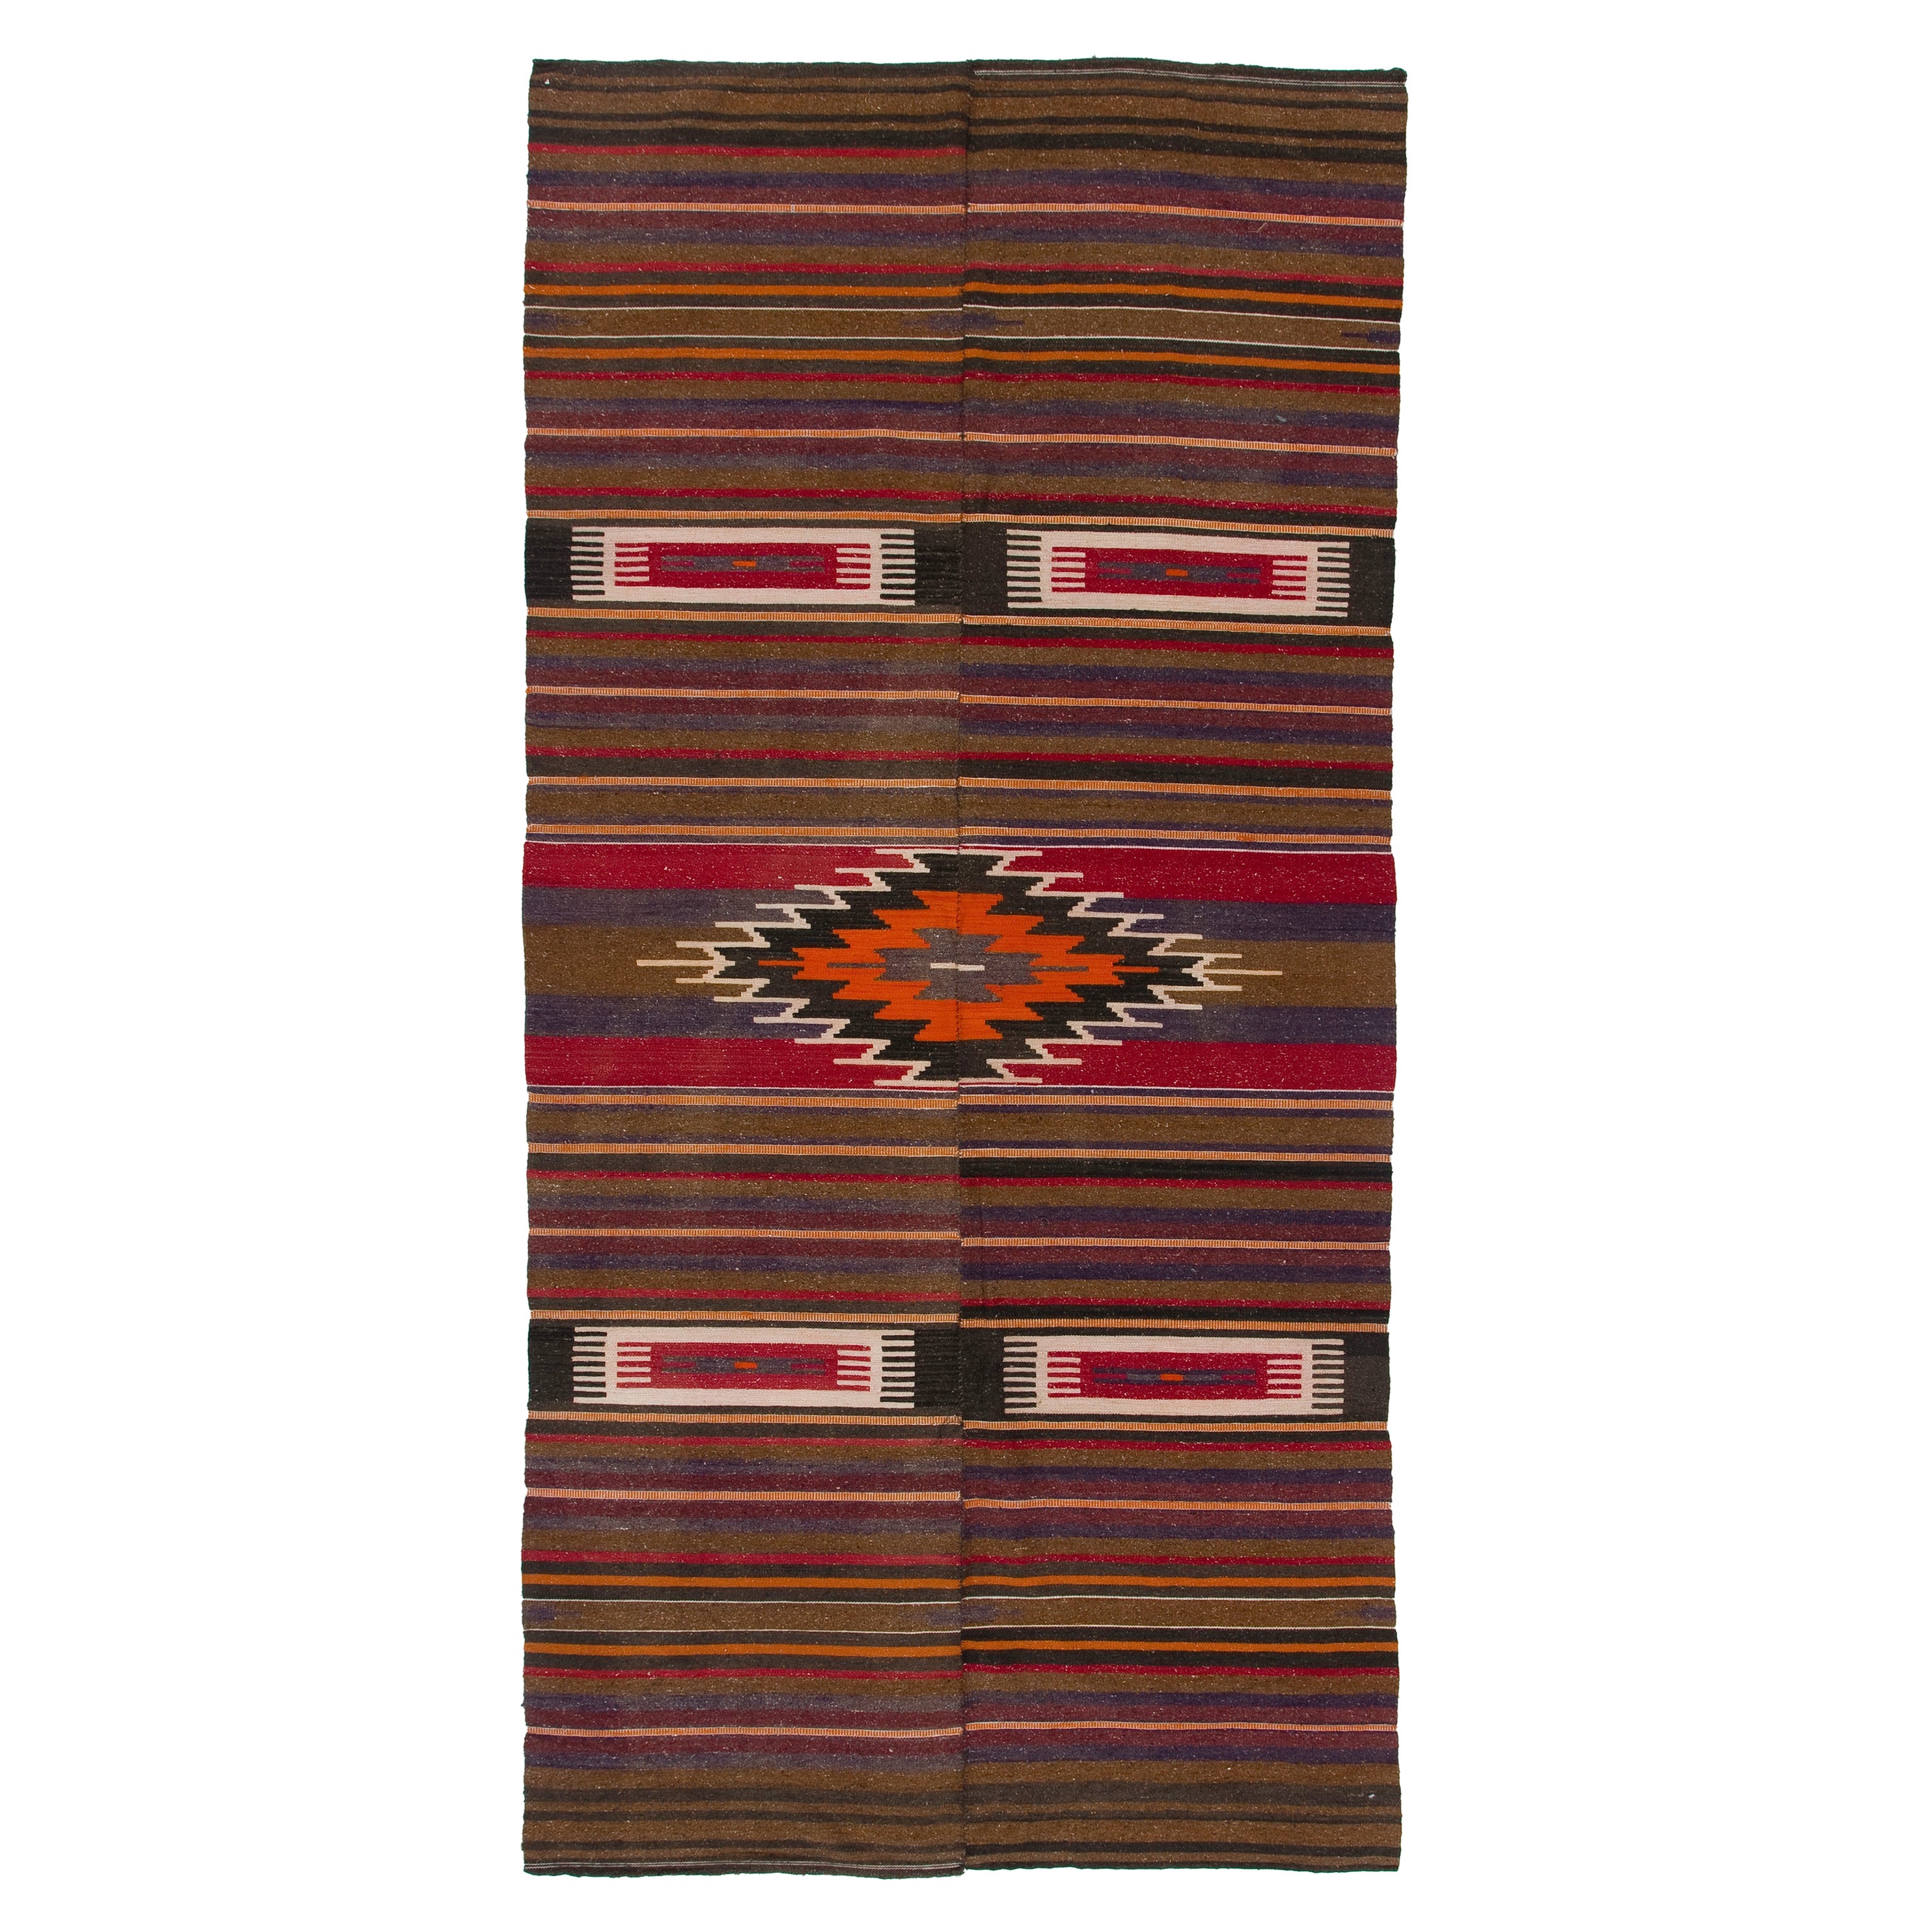 Nomadic Vintage Anatolian Kilim Rug. Flat-Weave Wool Floor Covering